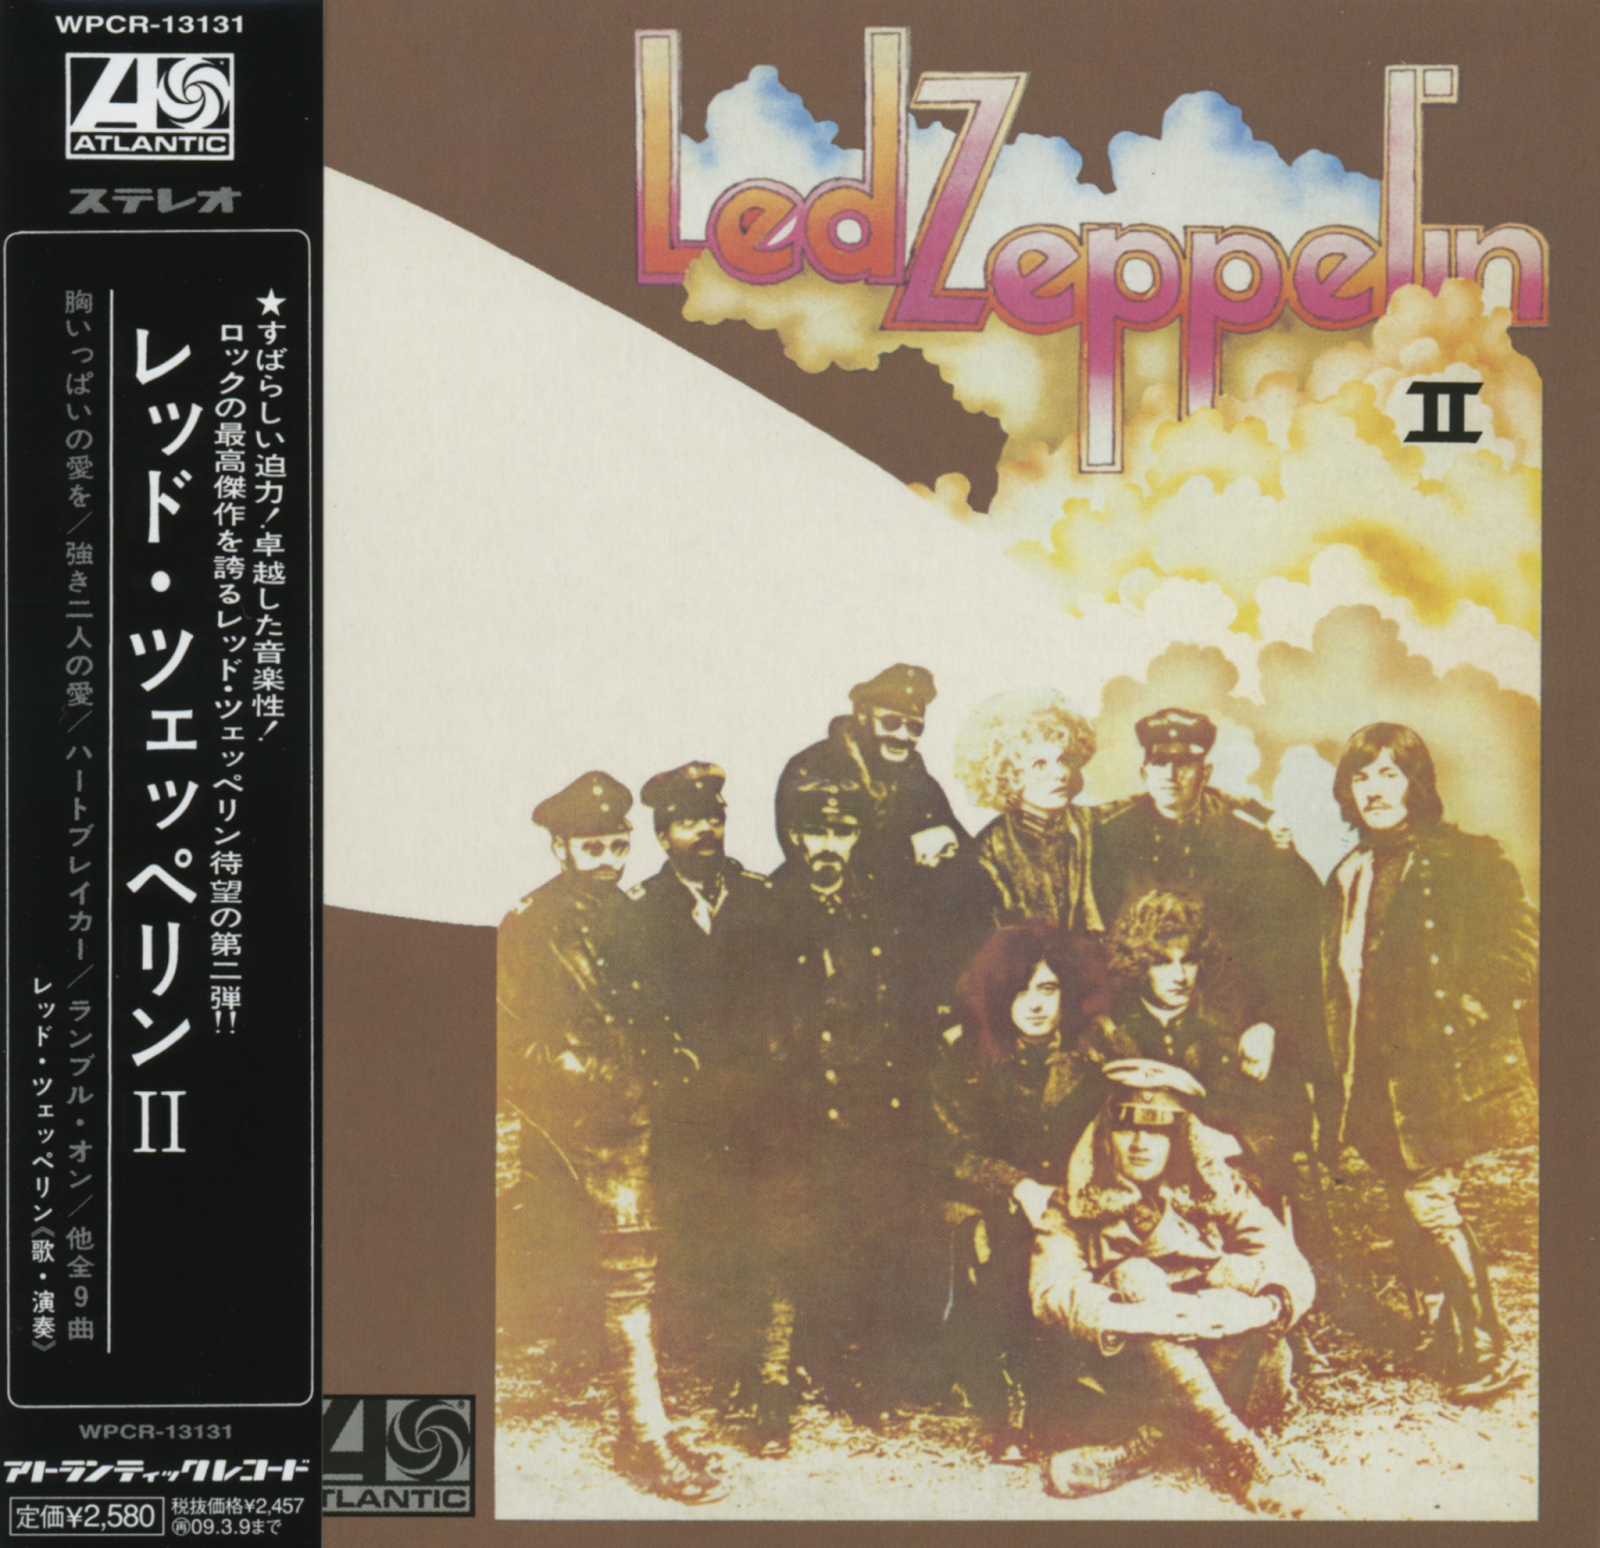 Jazz Rock Fusion Guitar: Led Zeppelin - 2008 